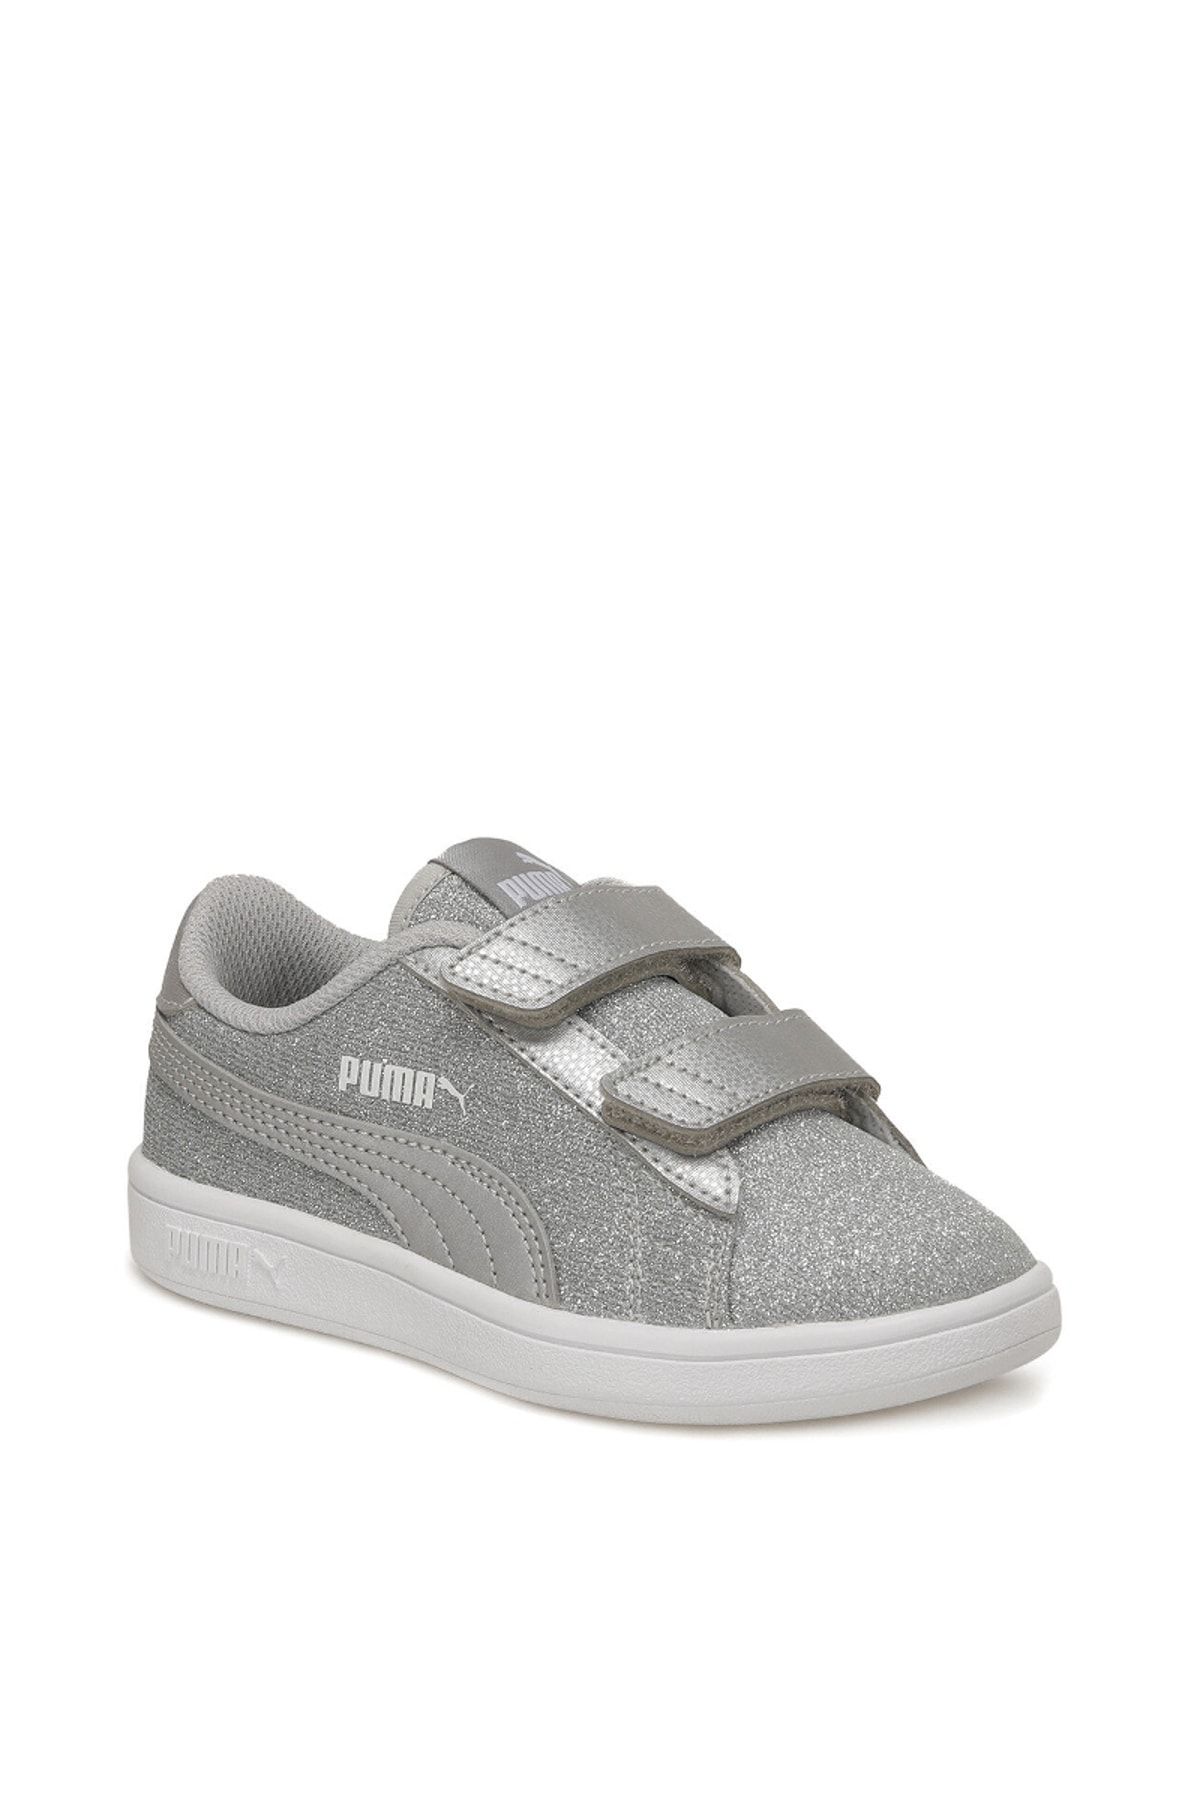 Puma SMASH V2 GLITZ GLAM V PS Gümüş Kız Çocuk Sneaker Ayakkabı 100583333